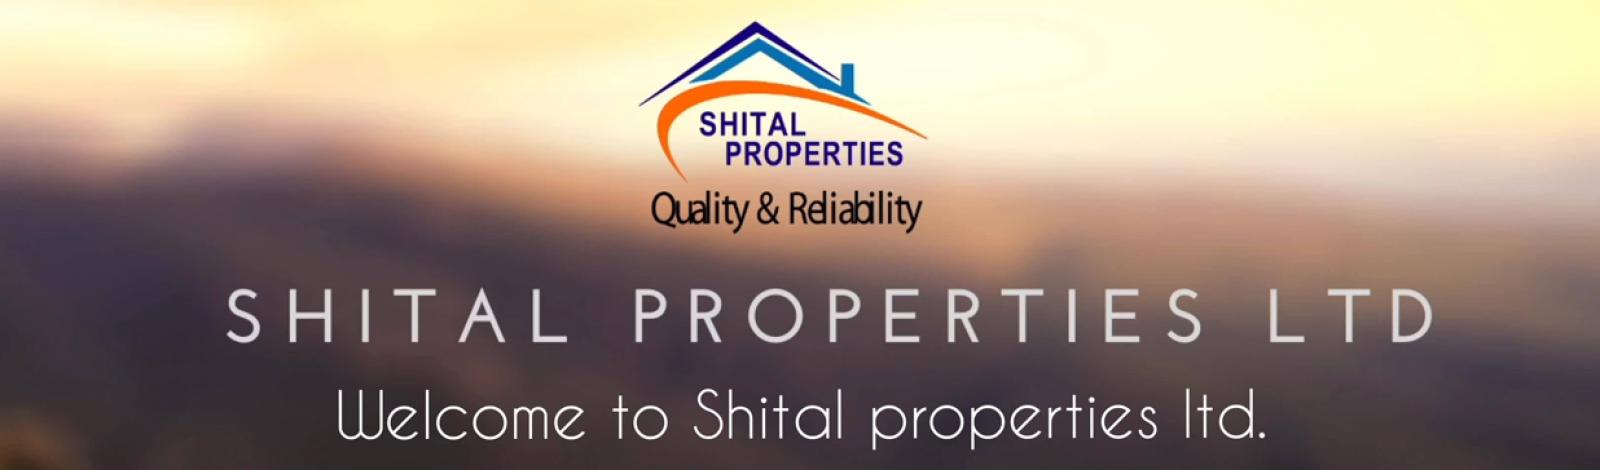 Shital Properties Ltd banner